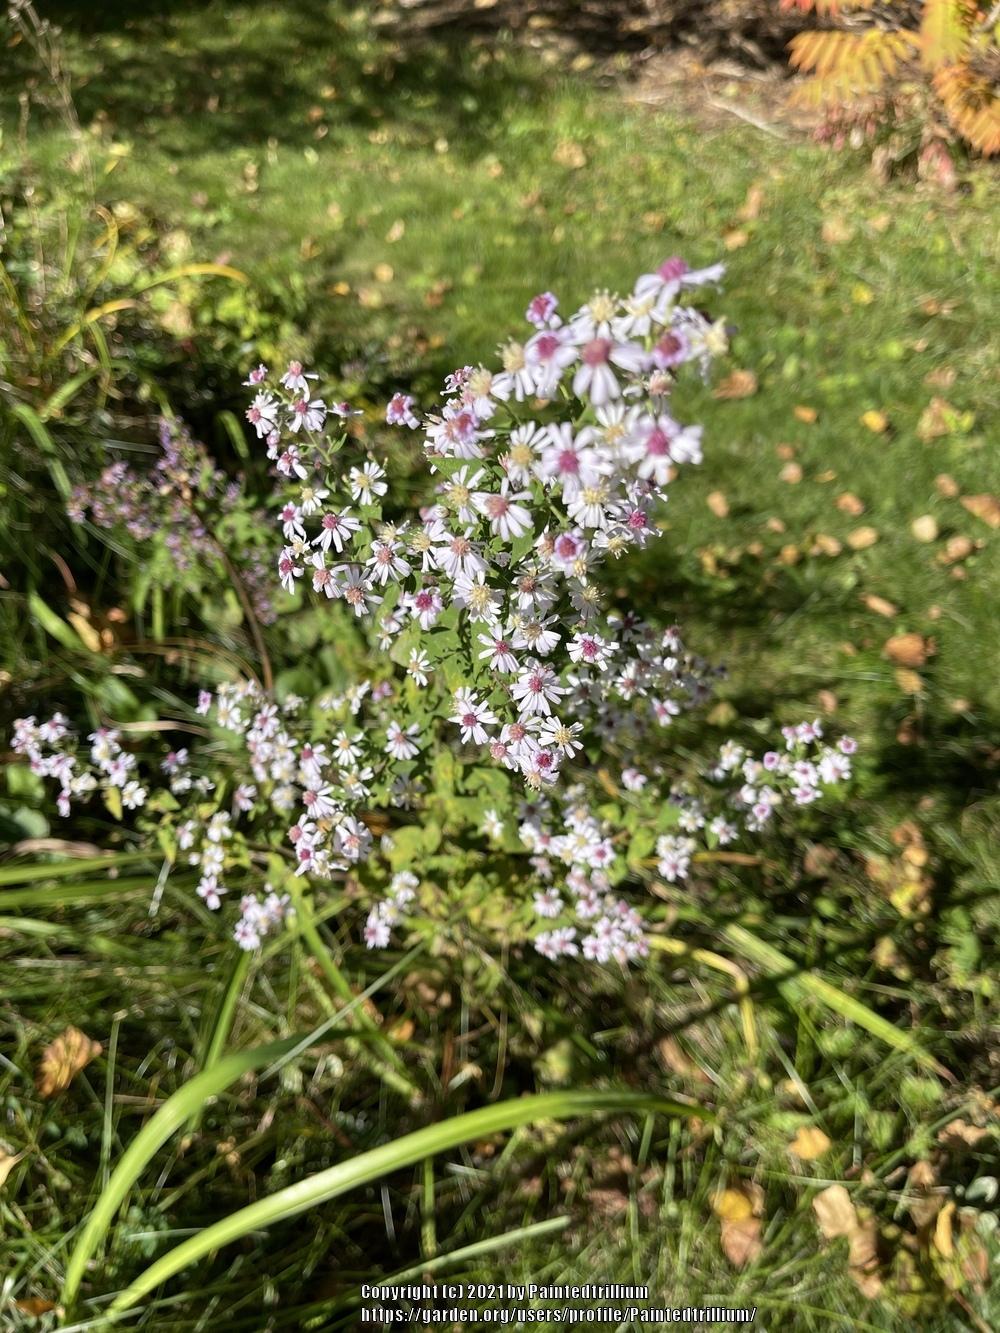 Photo of Common Blue Wood Aster (Symphyotrichum cordifolium) uploaded by Paintedtrillium